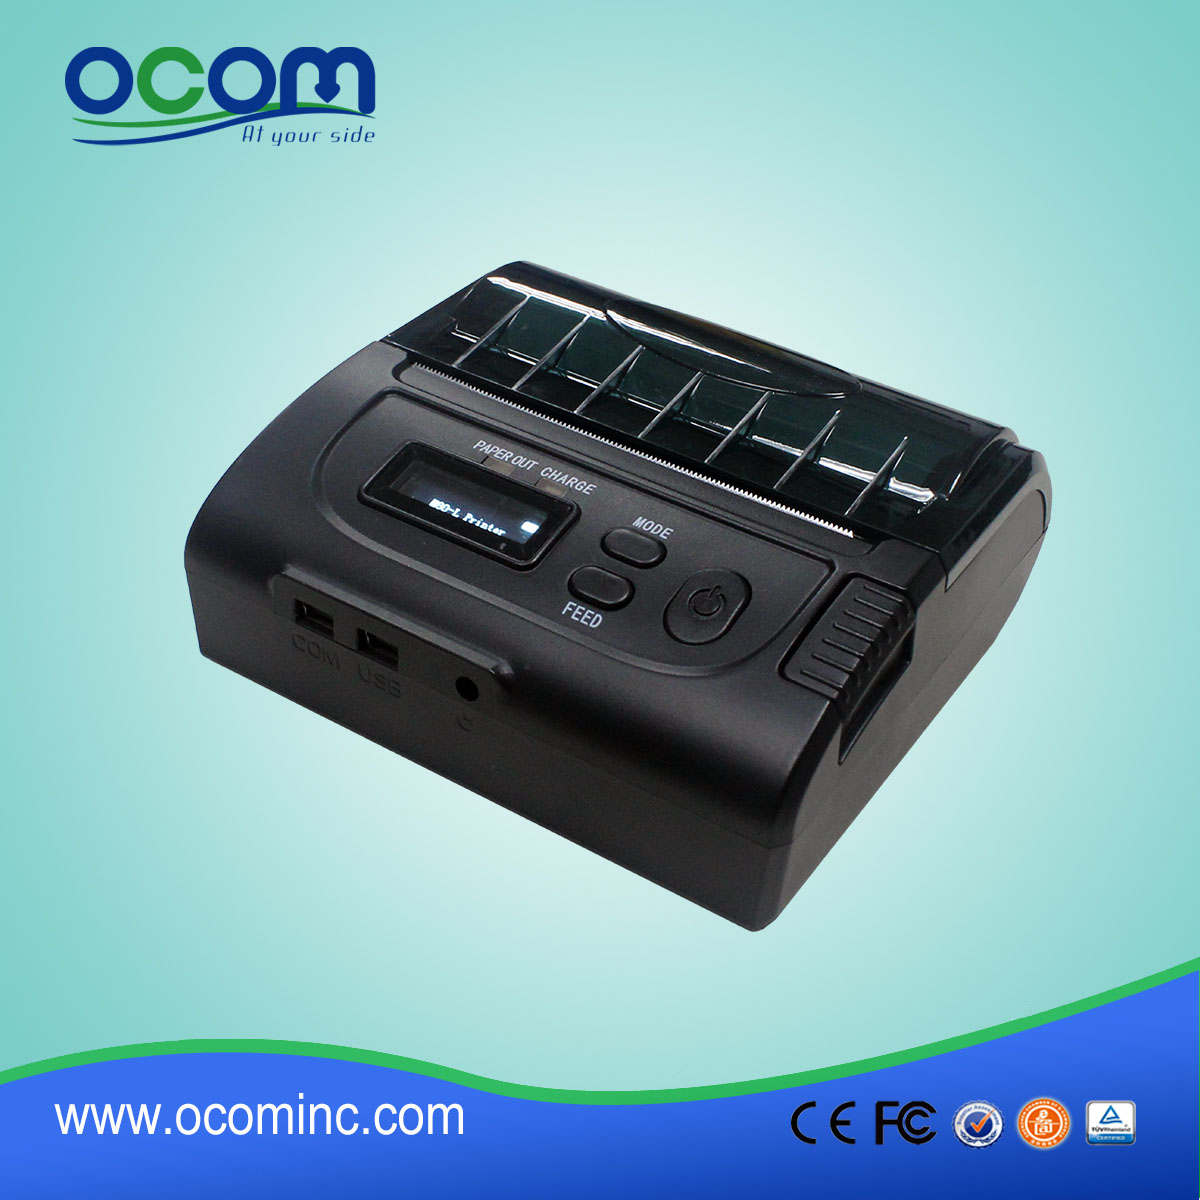 OCPP-M083 80mm WIFI Bluetooth Thermal Receipt Printer Portable